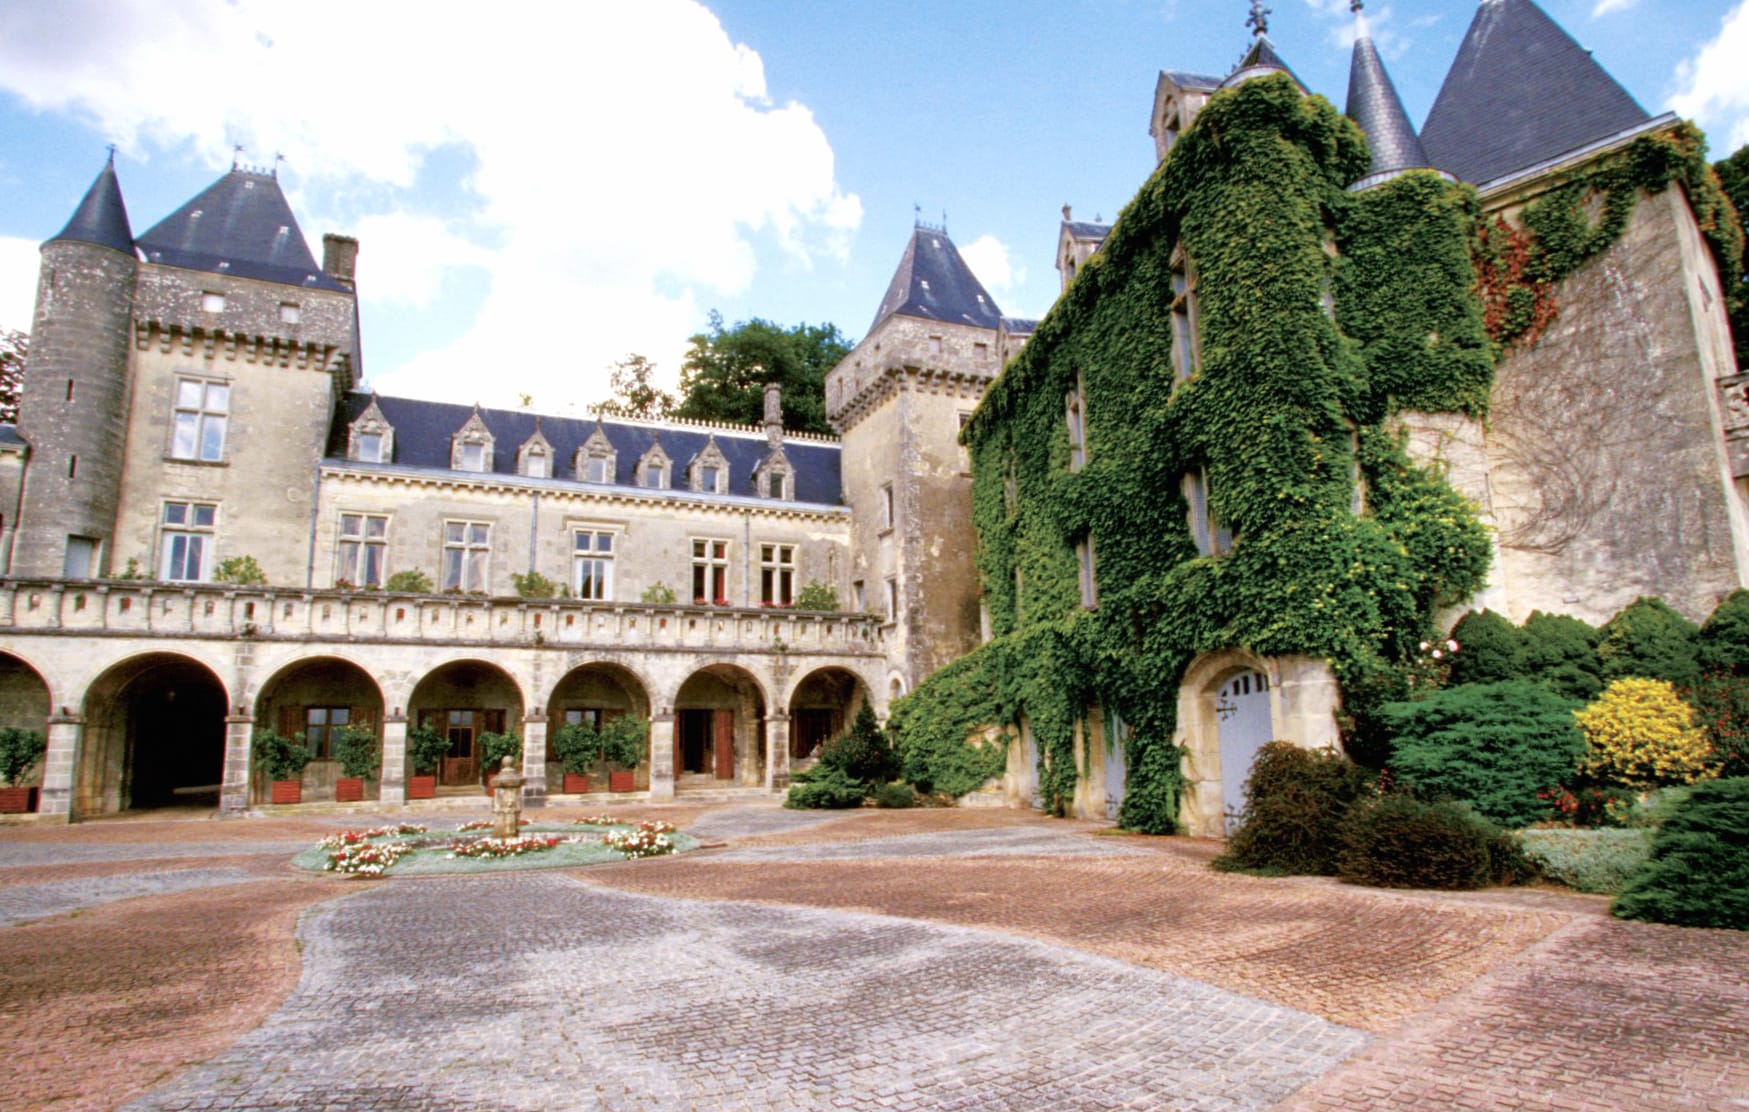 Chateau de La Riviere-Bourdet at 1152 x 864 size wallpapers HD quality